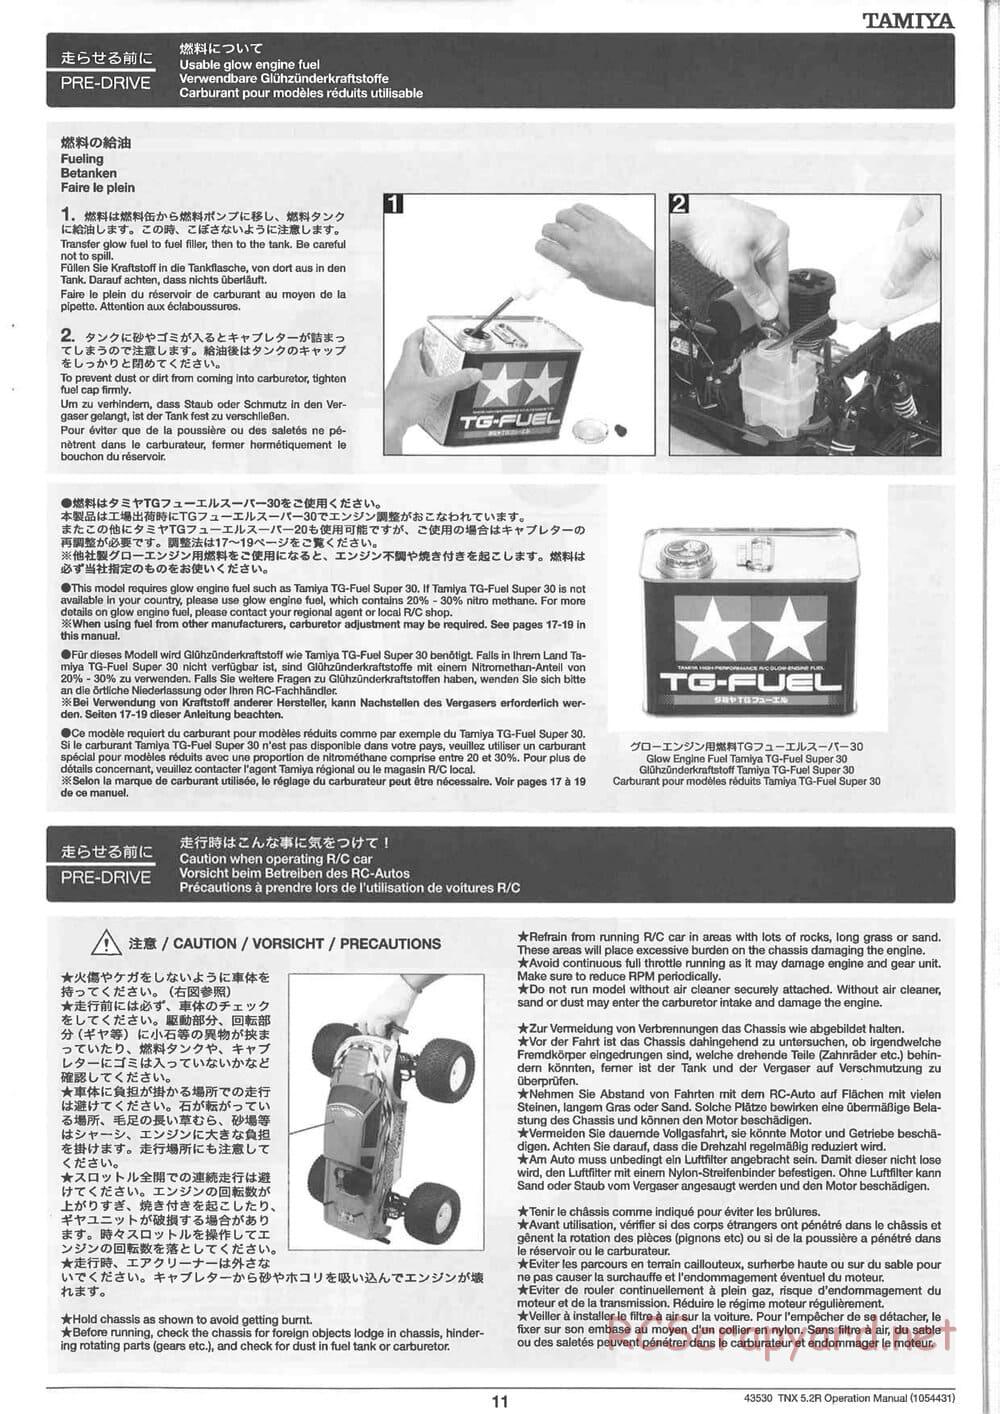 Tamiya - TNX 5.2R - TGM-04 - Operating Manual - Page 11